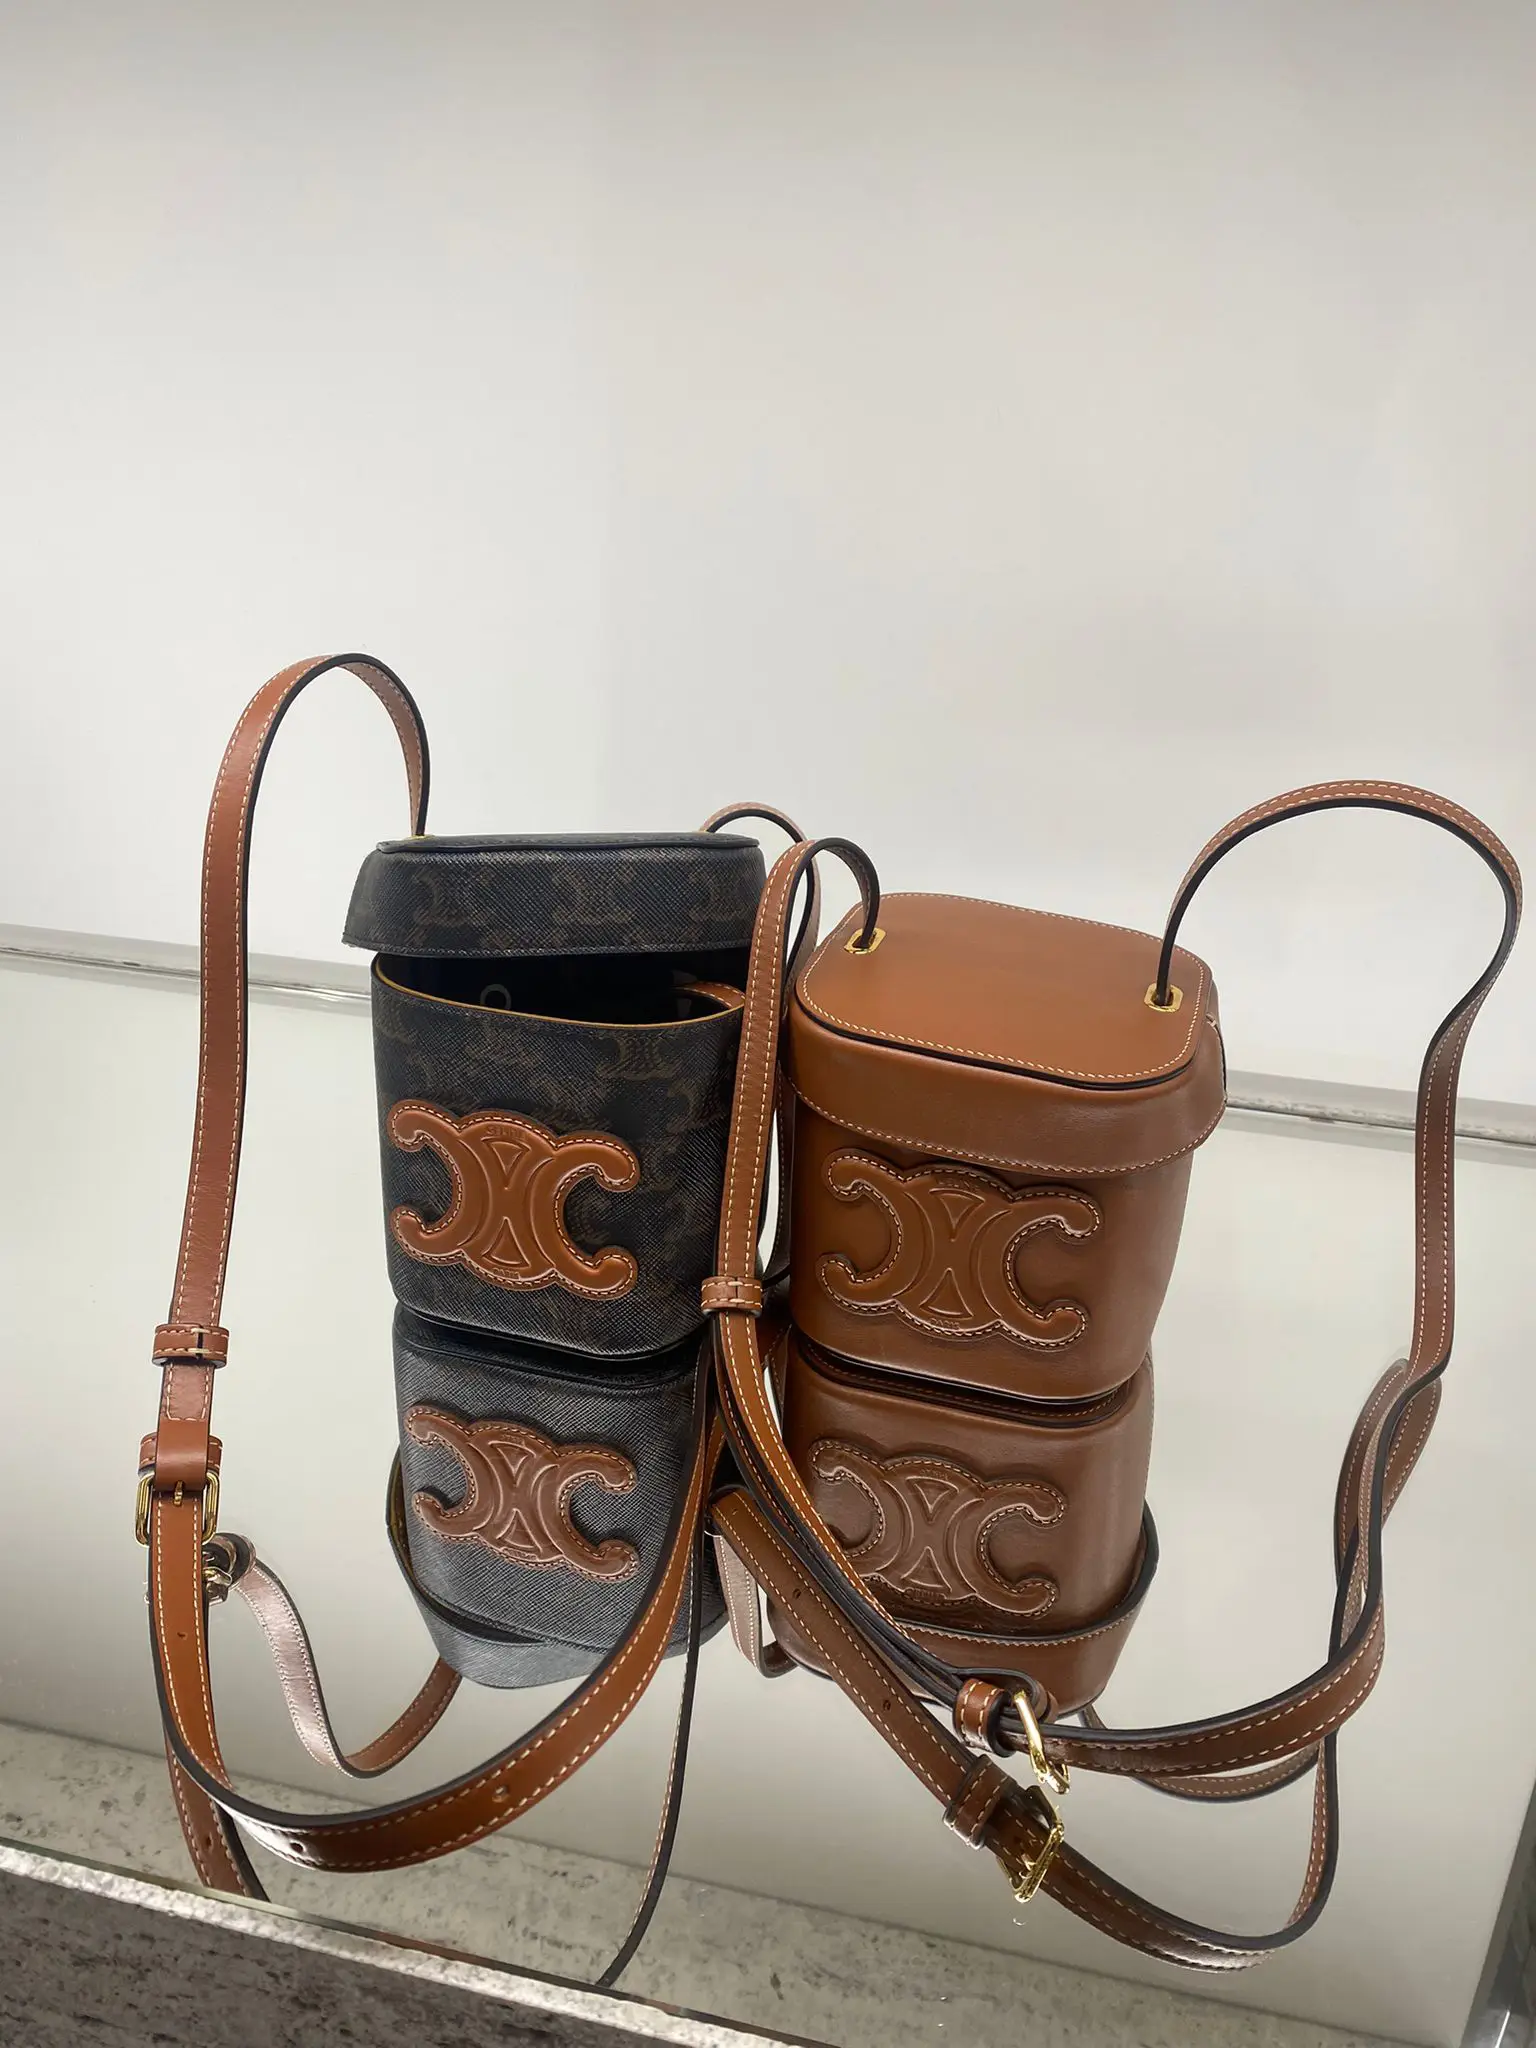 Strap Happy: Christian Louboutin's Interchangeable Handle Bags